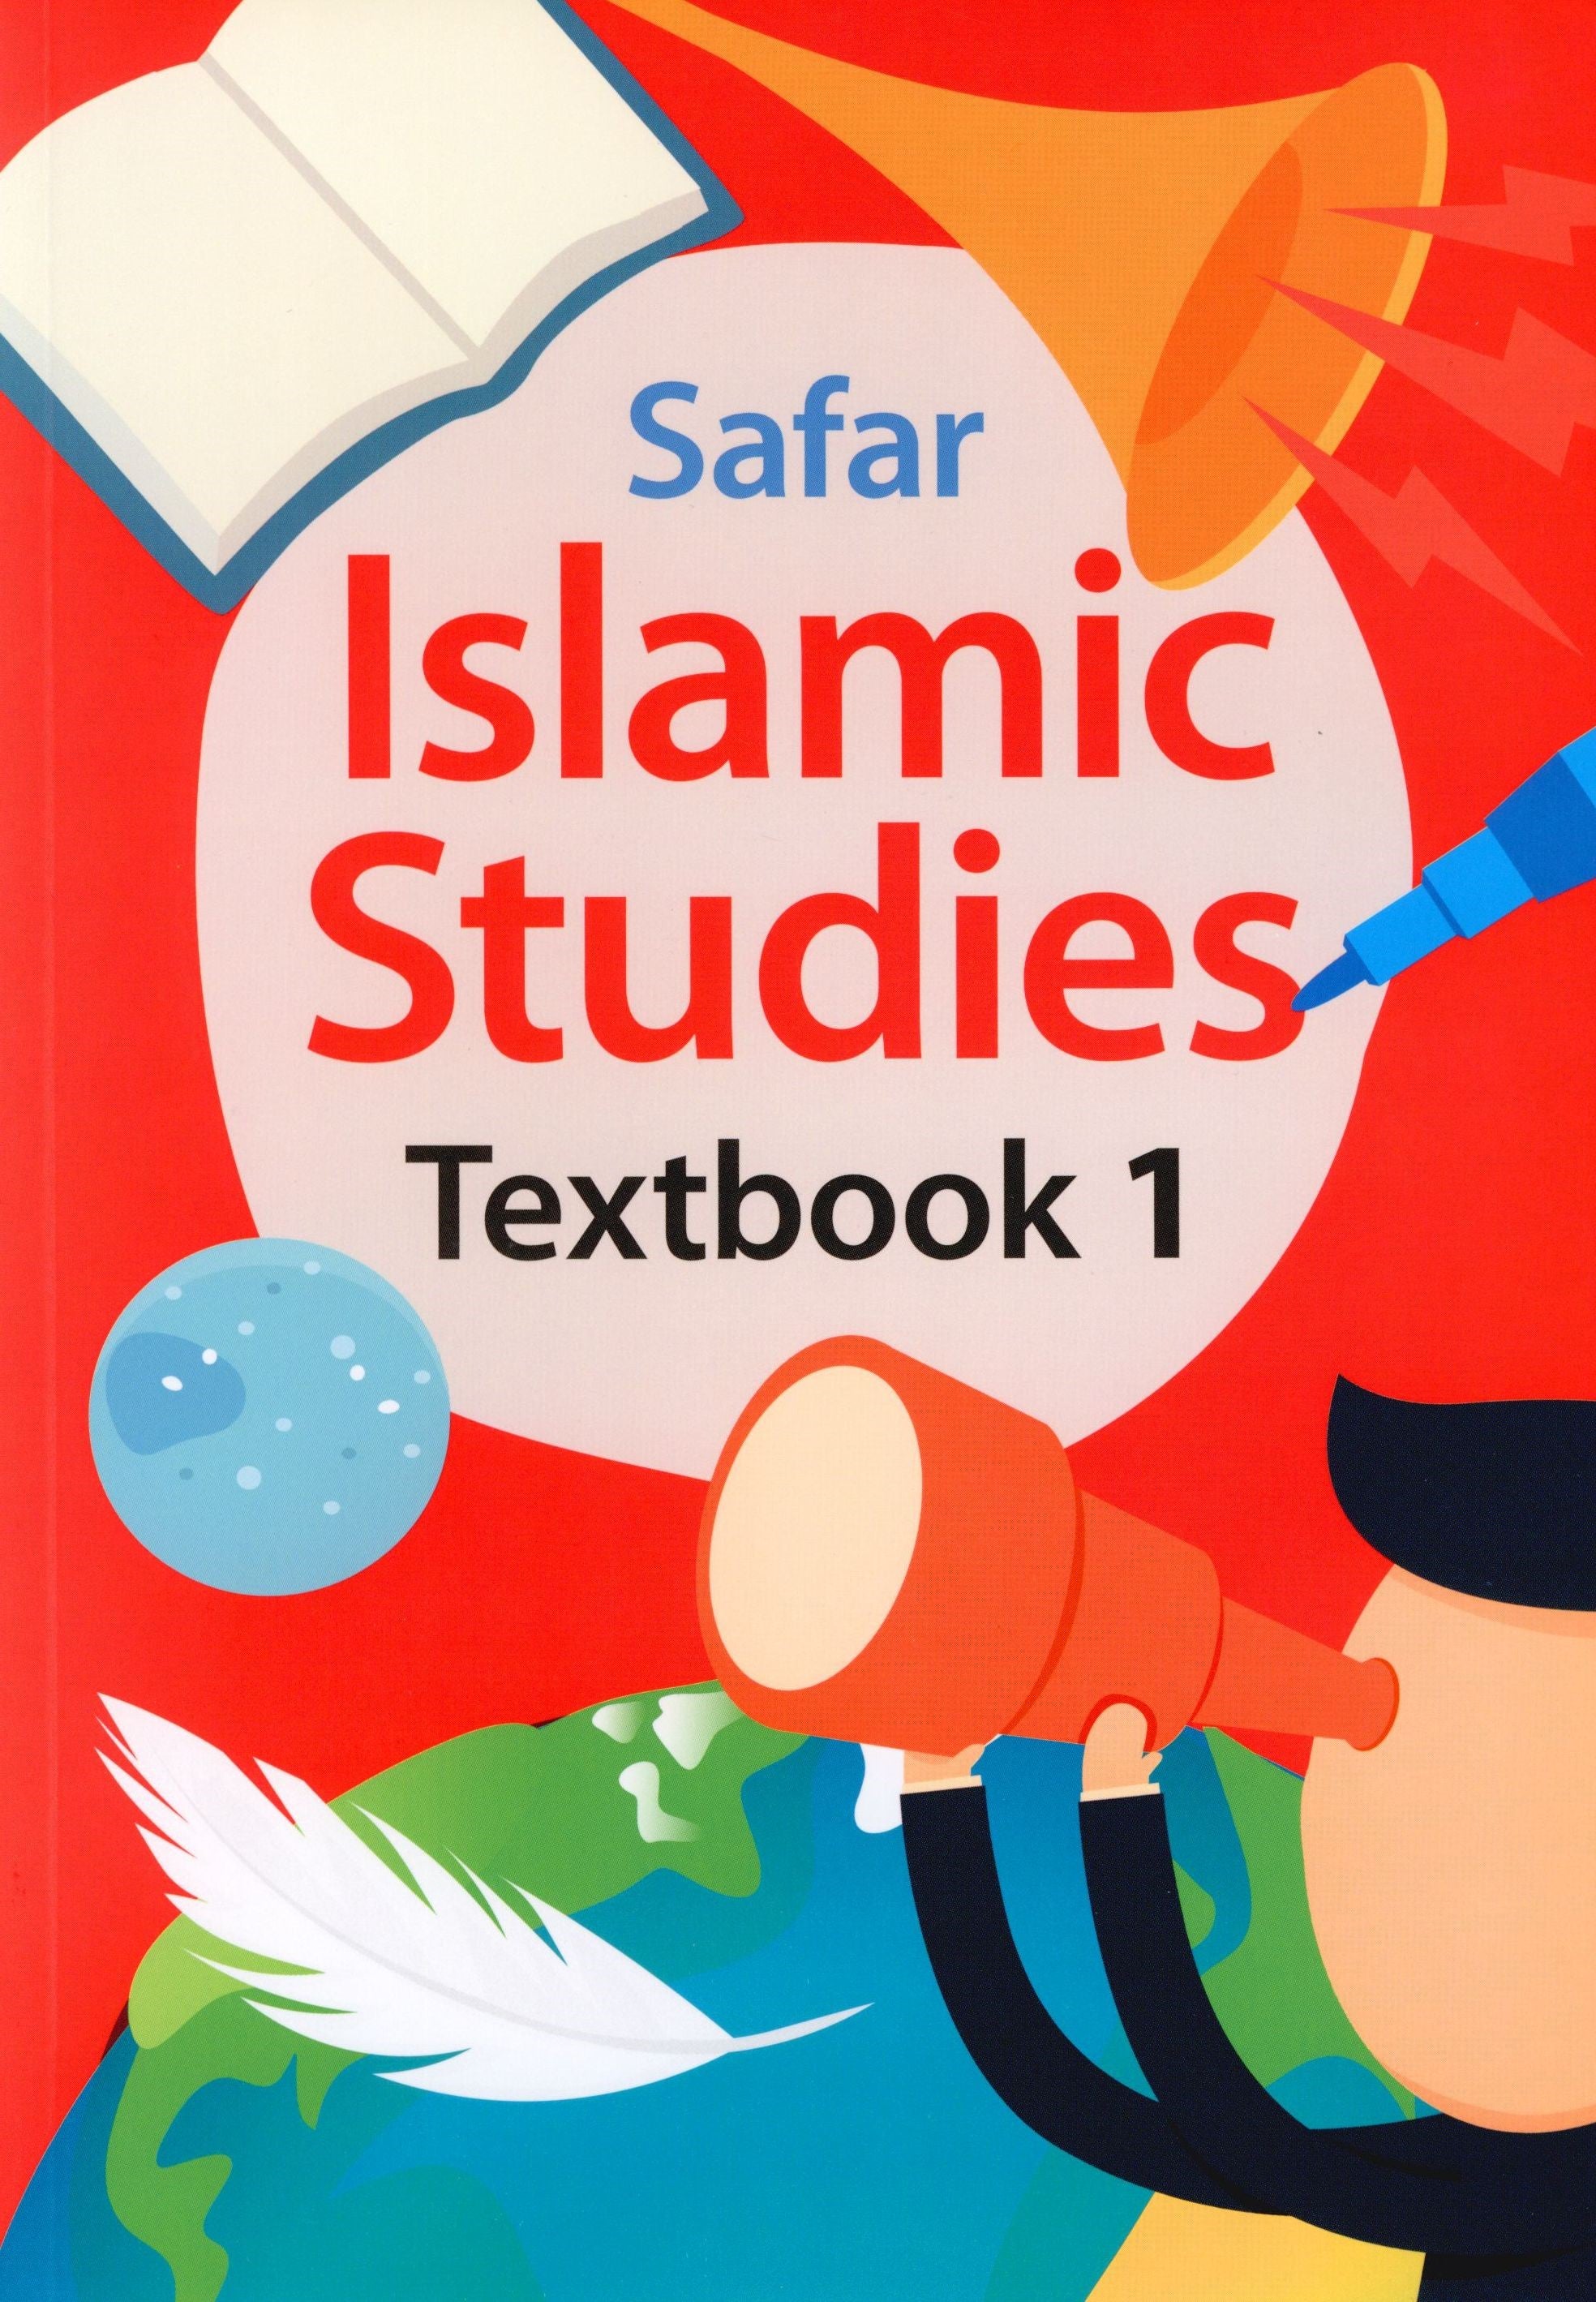 Safar Islamic Studies Textbook 1